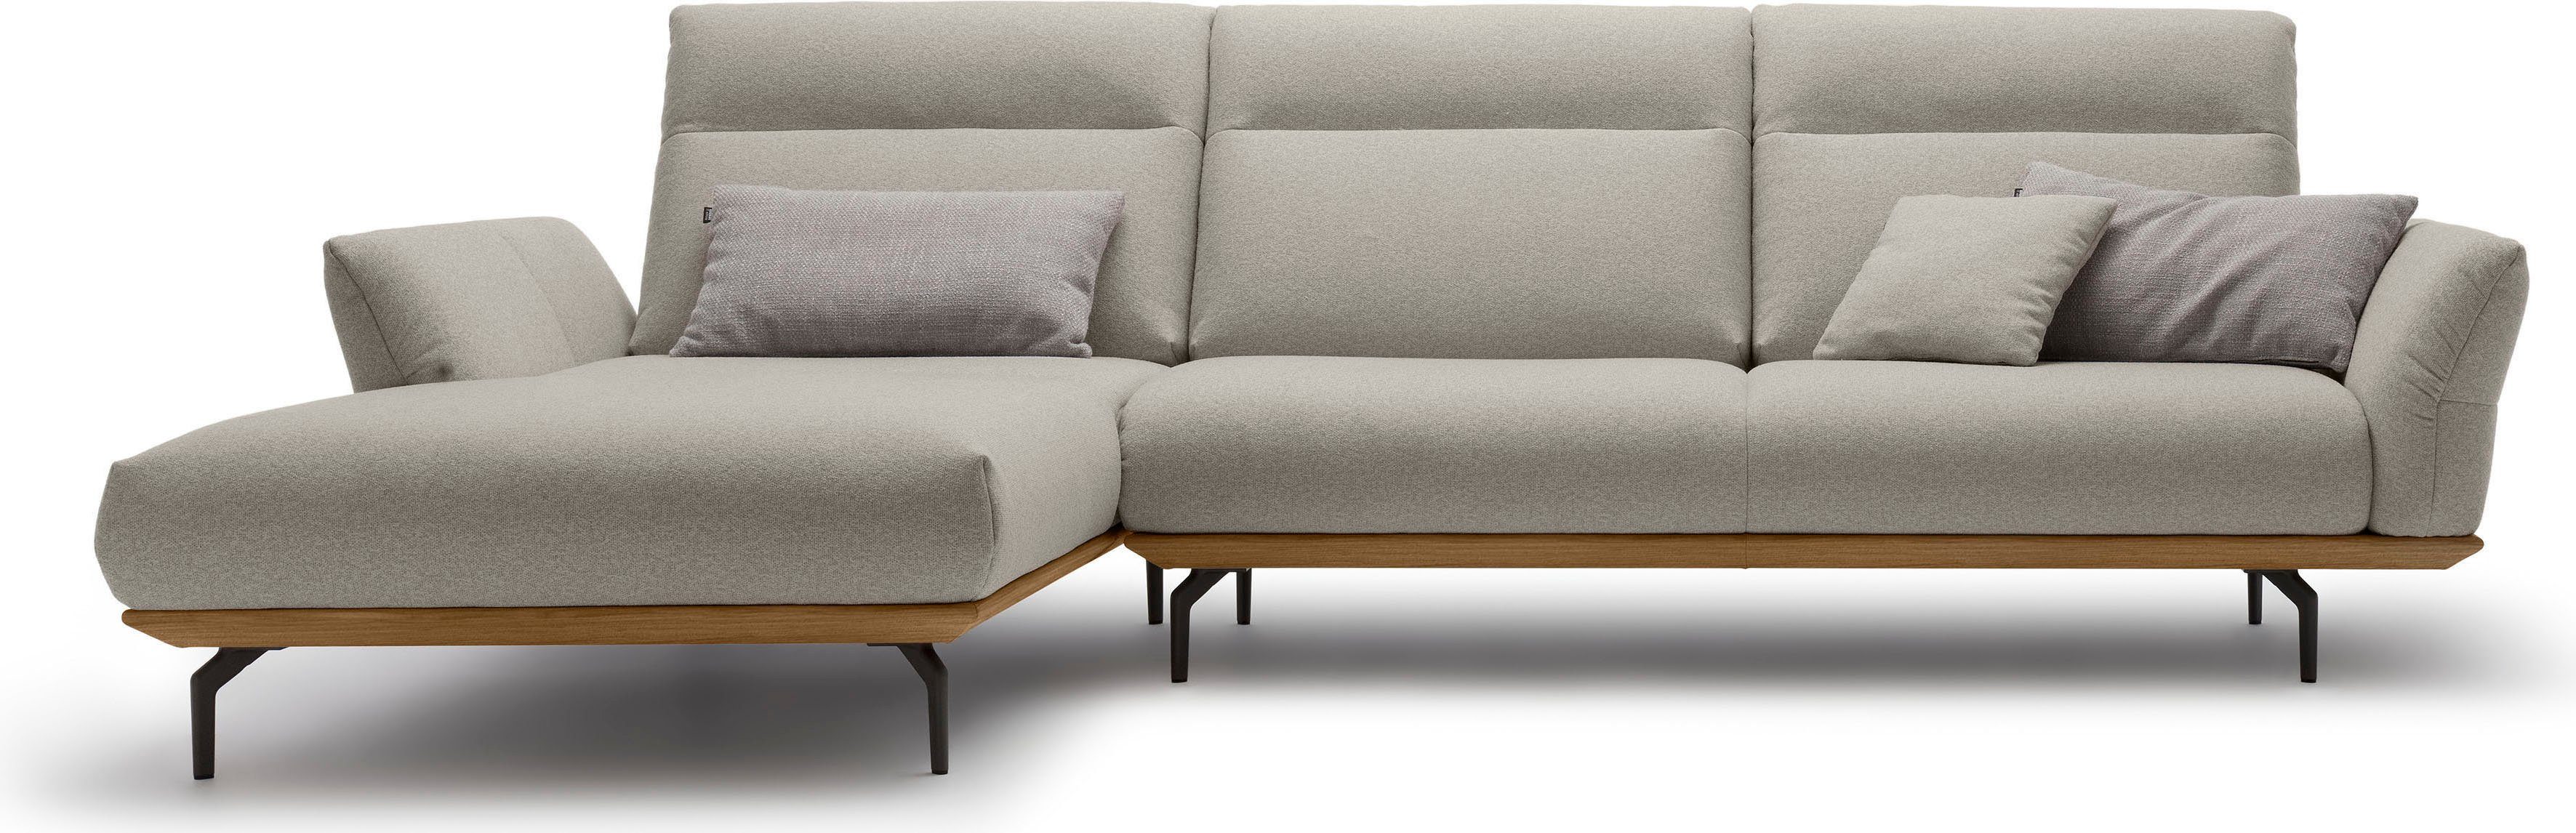 hülsta sofa in Breite Sockel cm hs.460, 318 Winkelfüße Ecksofa Nussbaum, in Umbragrau